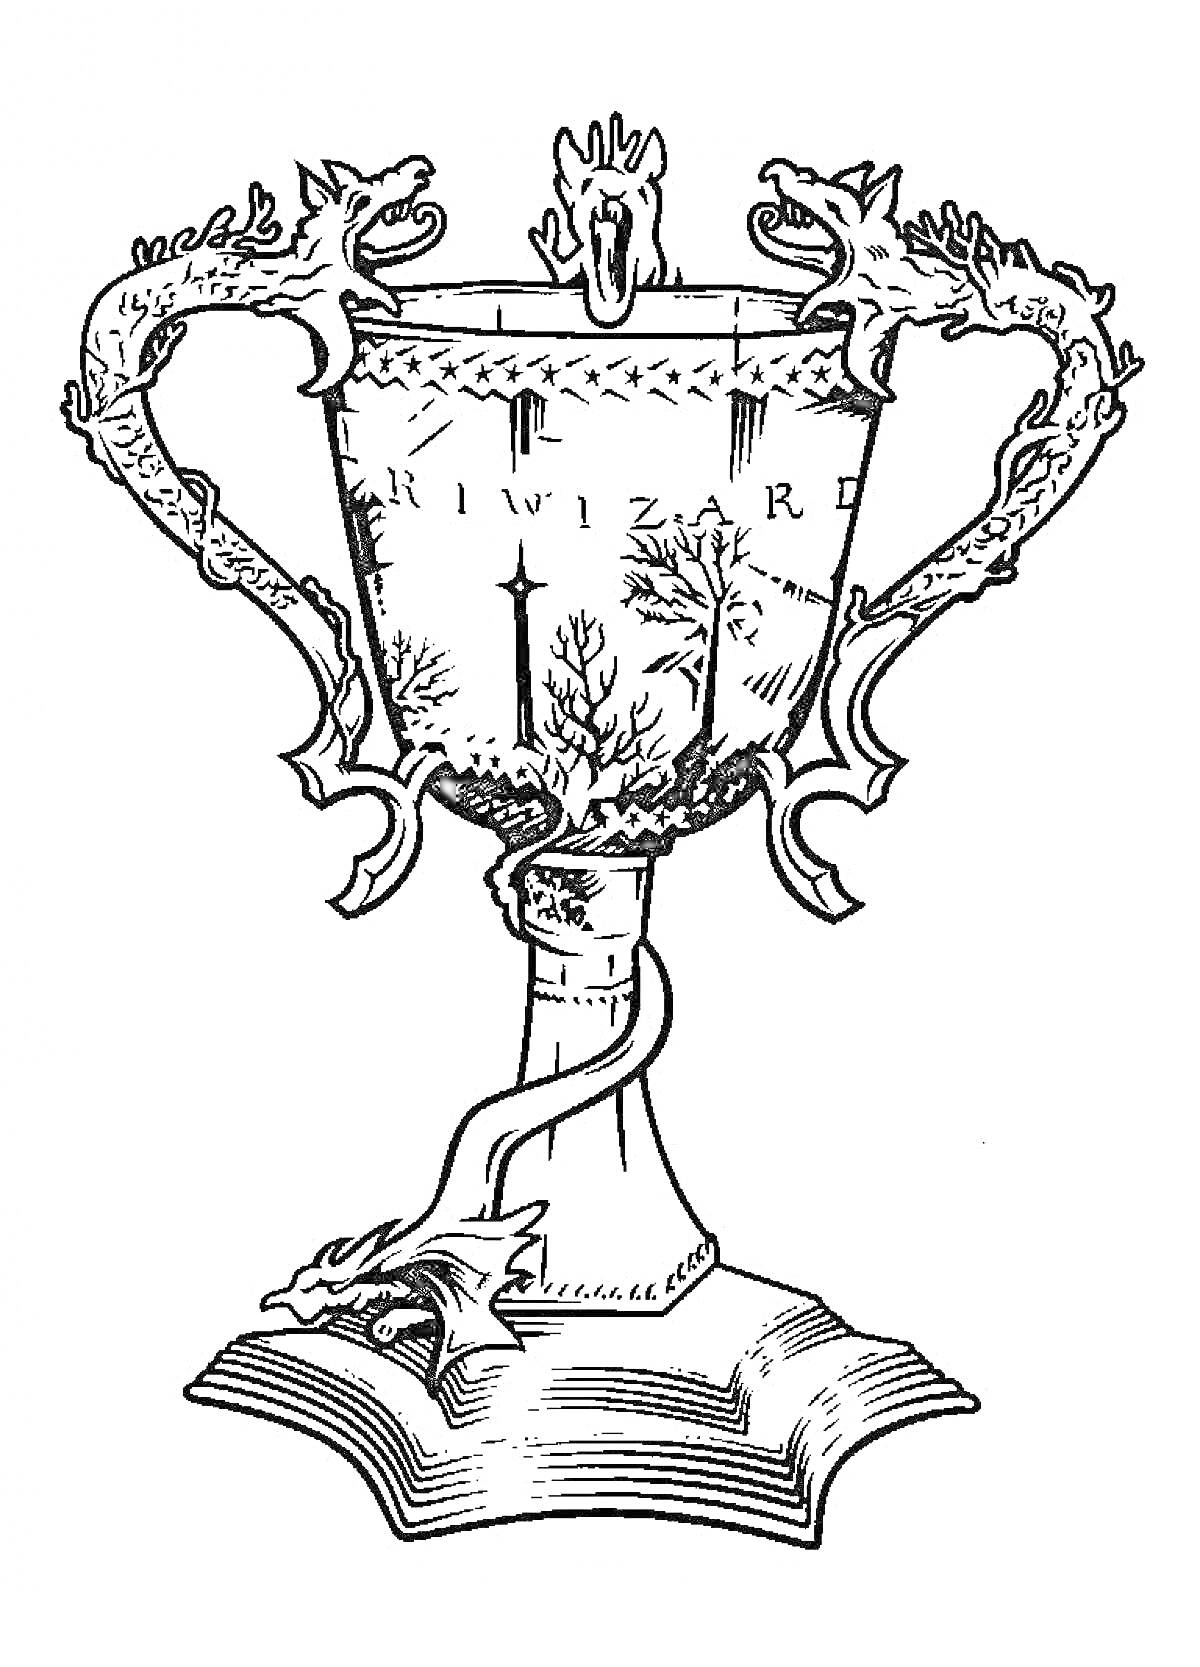 Кубок с двумя драконами и мечом, стоящий на книге, с надписью T R I W I Z A R D